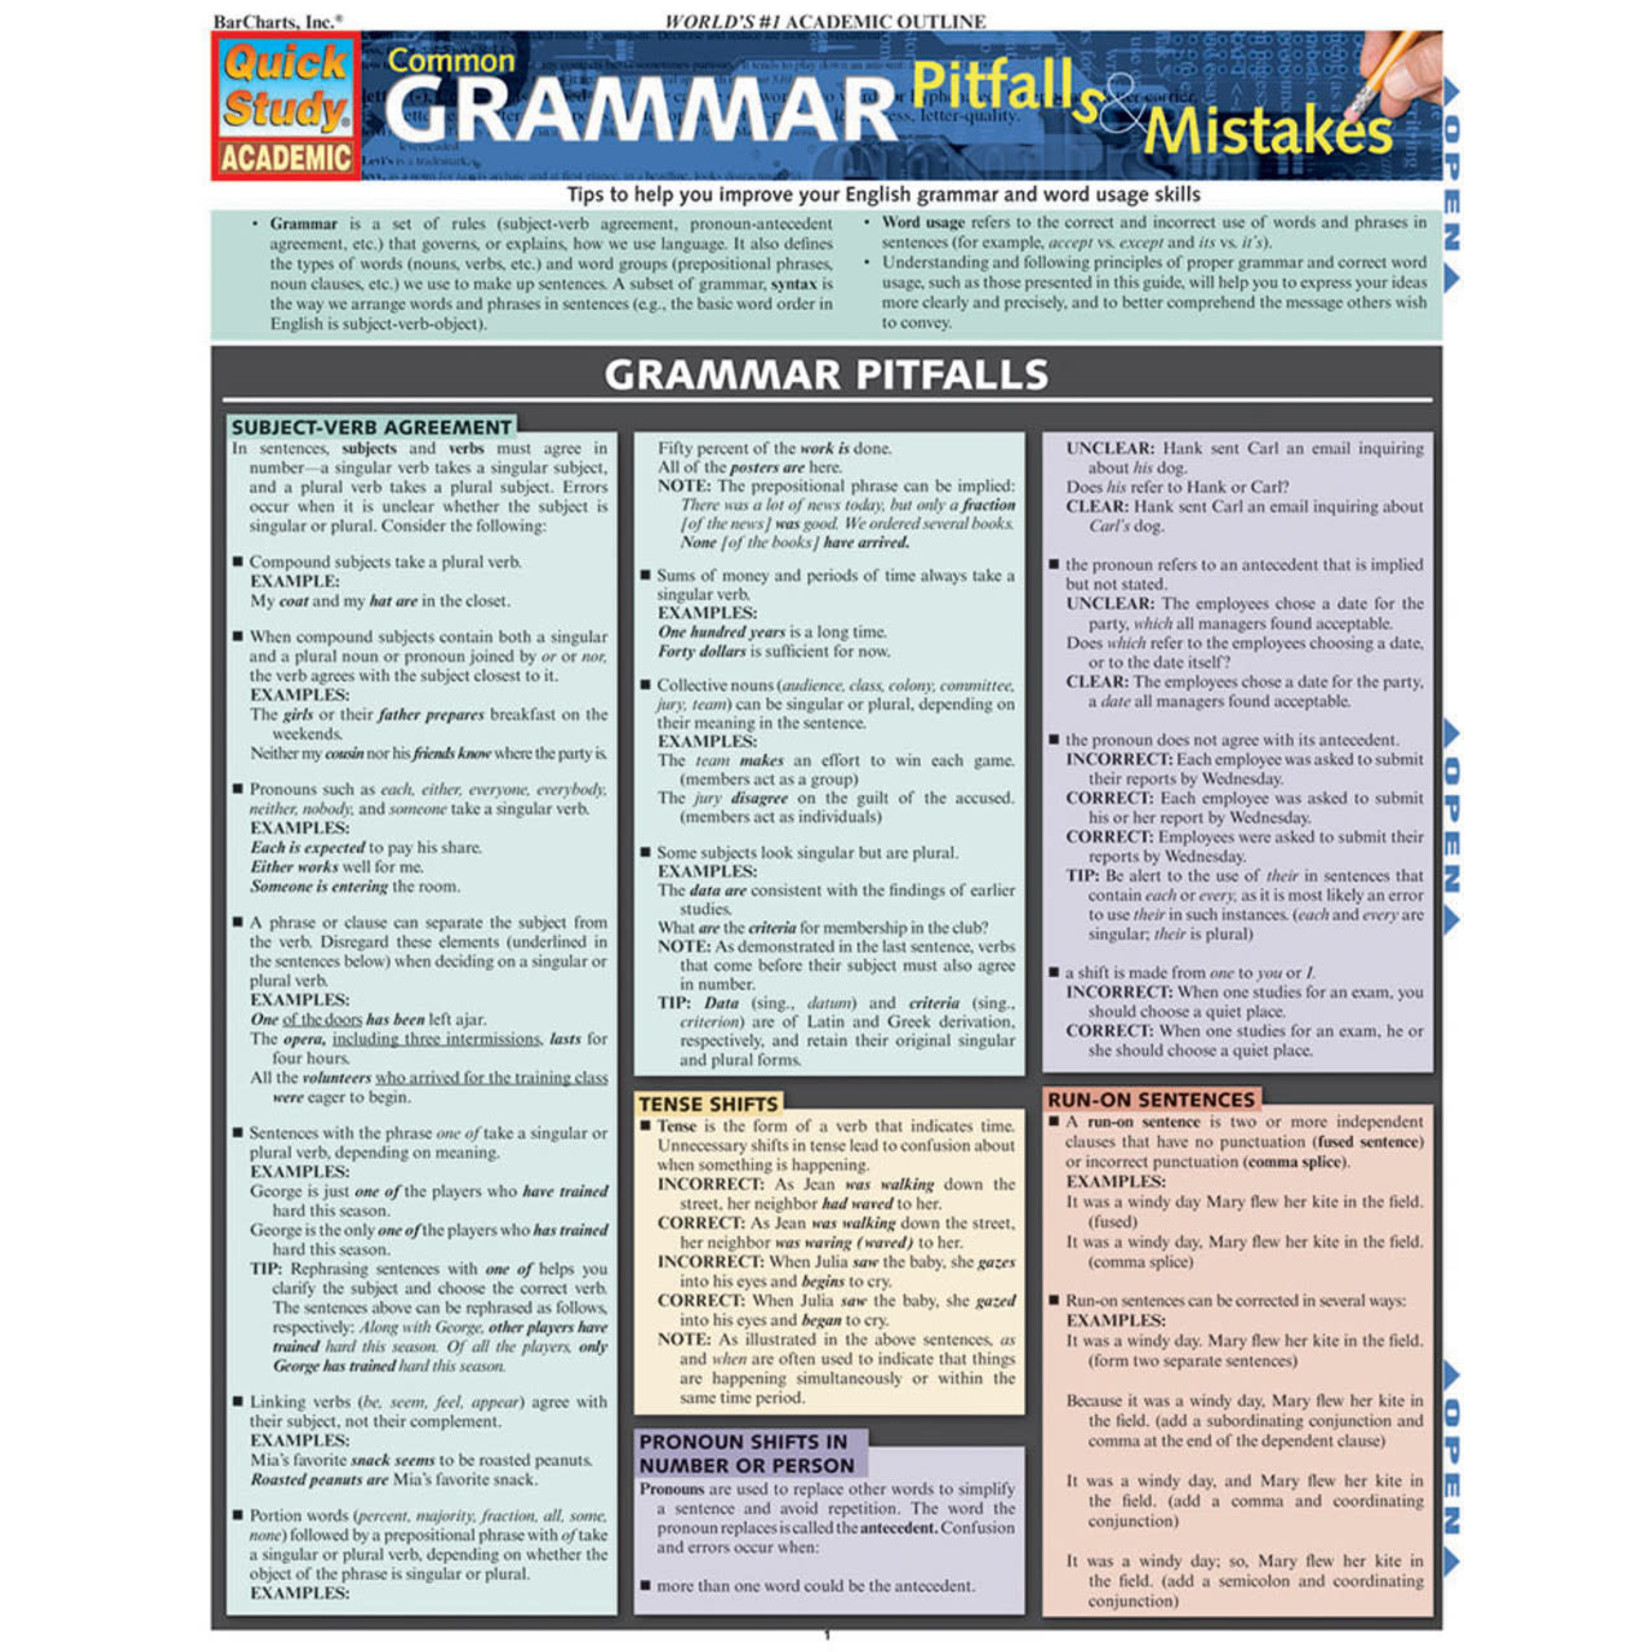 BAR CHARTS QuickStudy | Common Grammar Pitfalls & Mistakes Laminated Study Guide